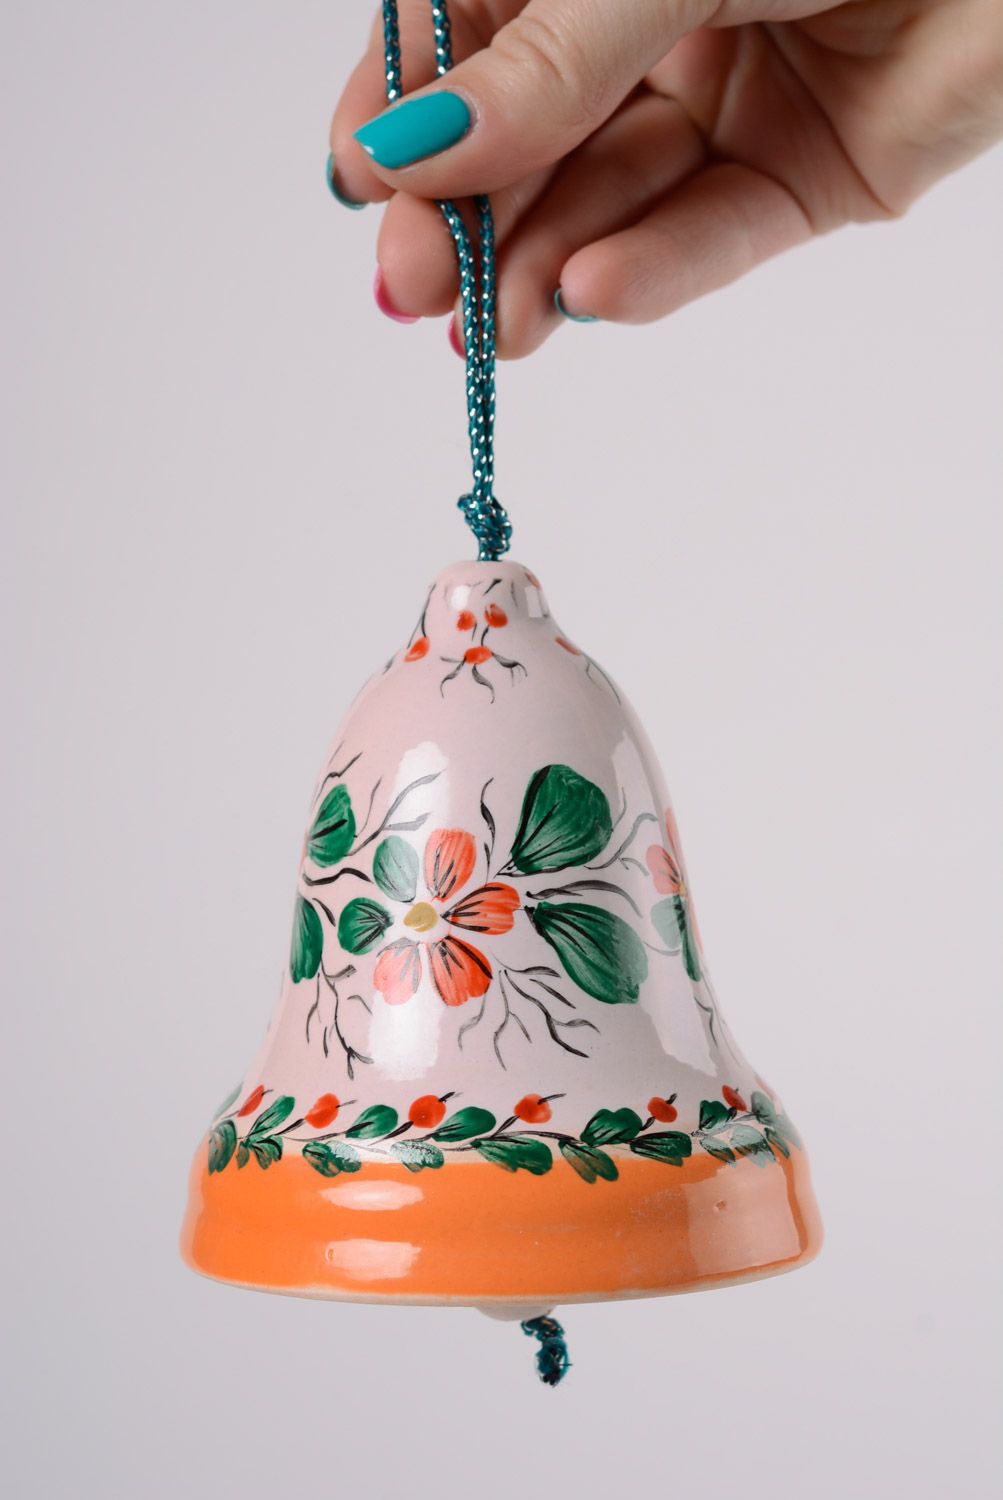 Nice handmade clay bell with painting majolica ceramics interior decor ideas photo 2